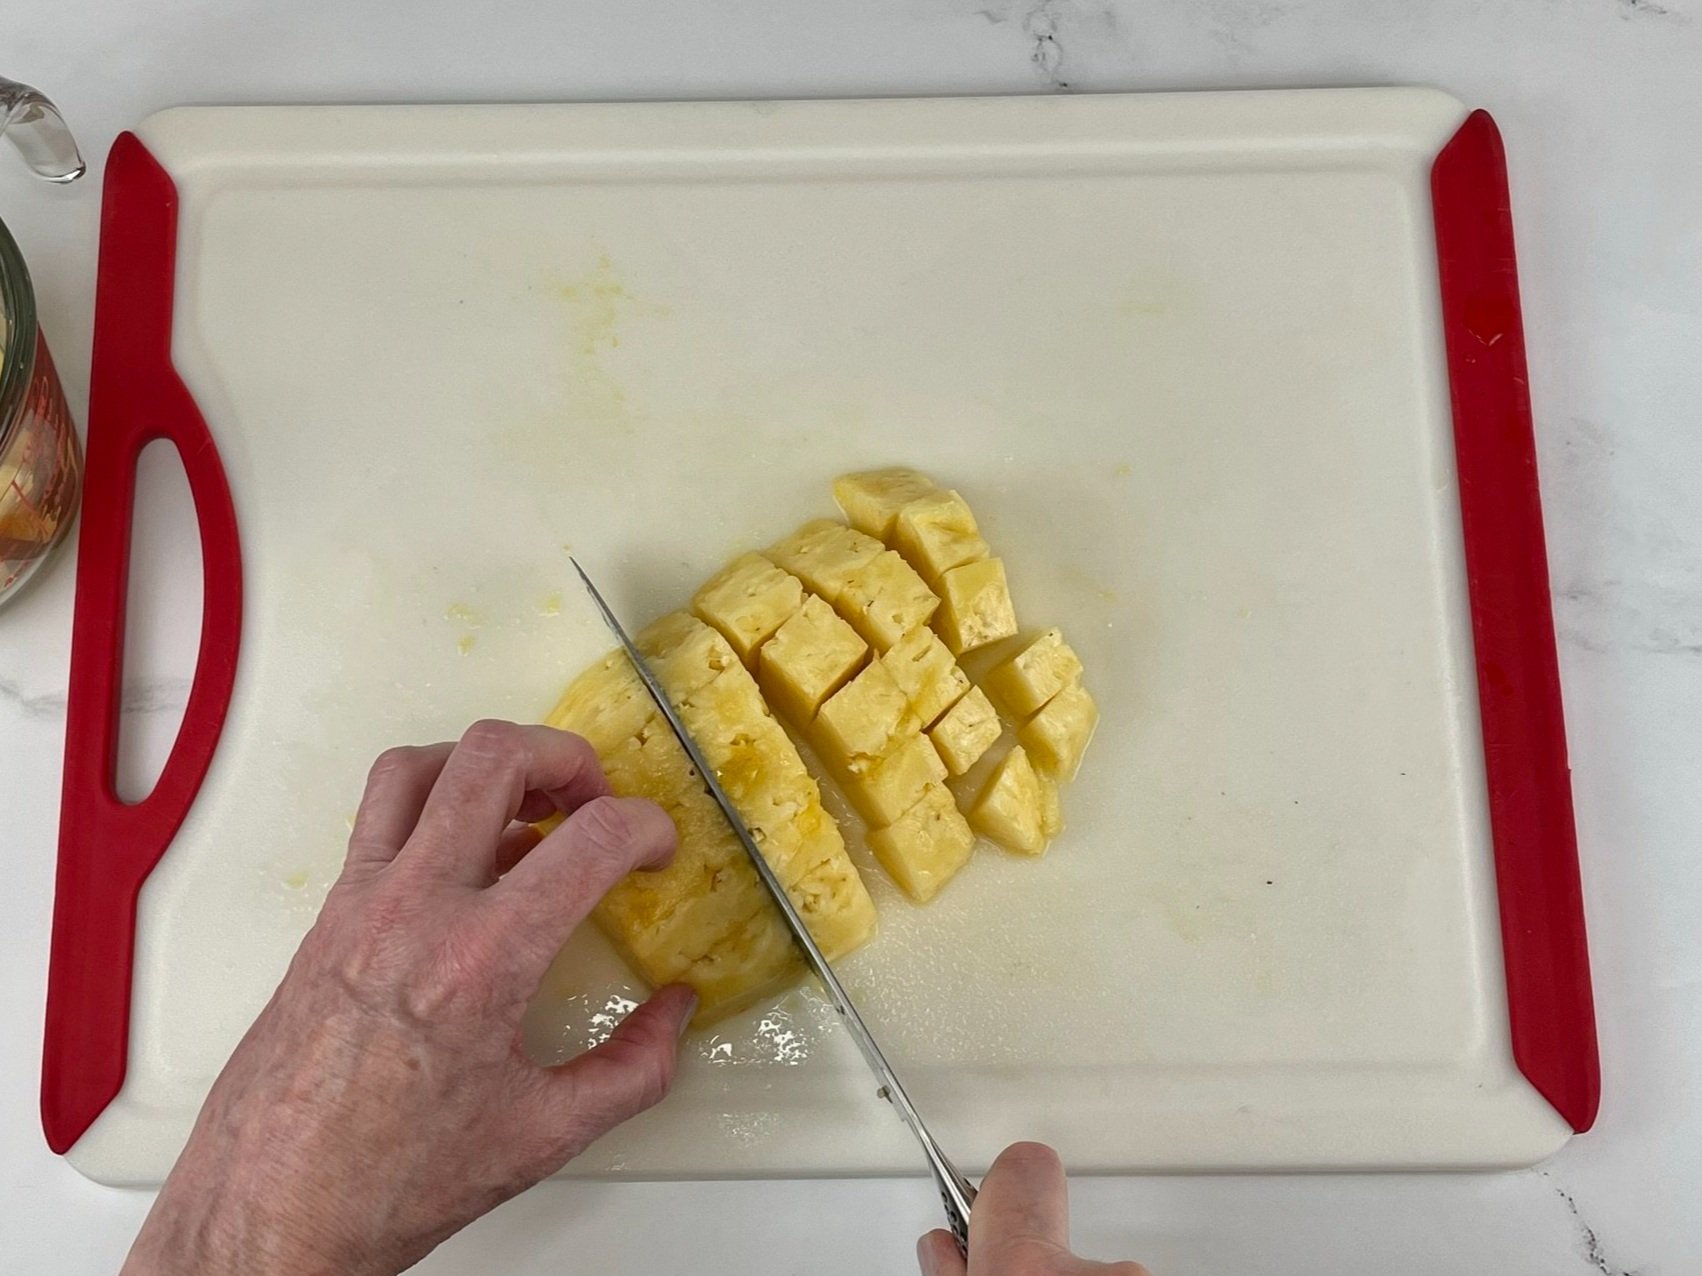 Cut pineapple.